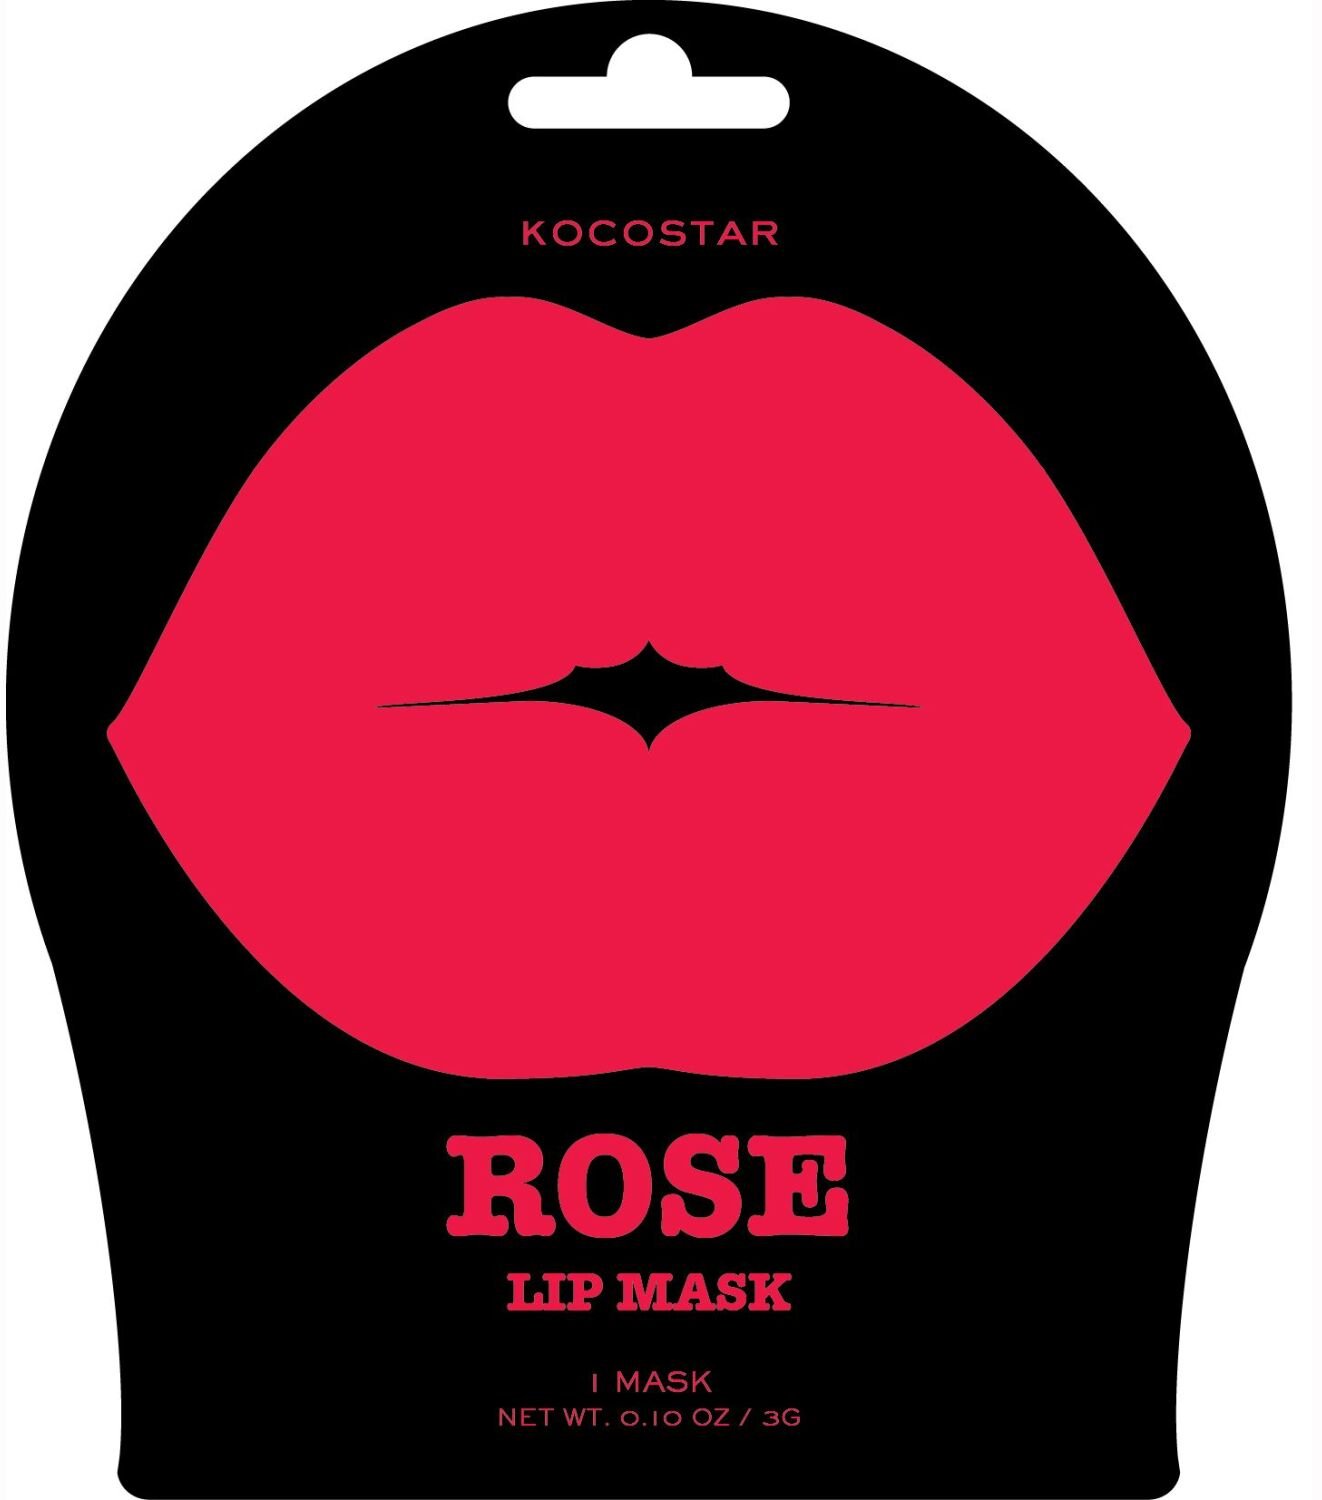 Kocostar Rose Lip Mask 3 g / 1 sheet